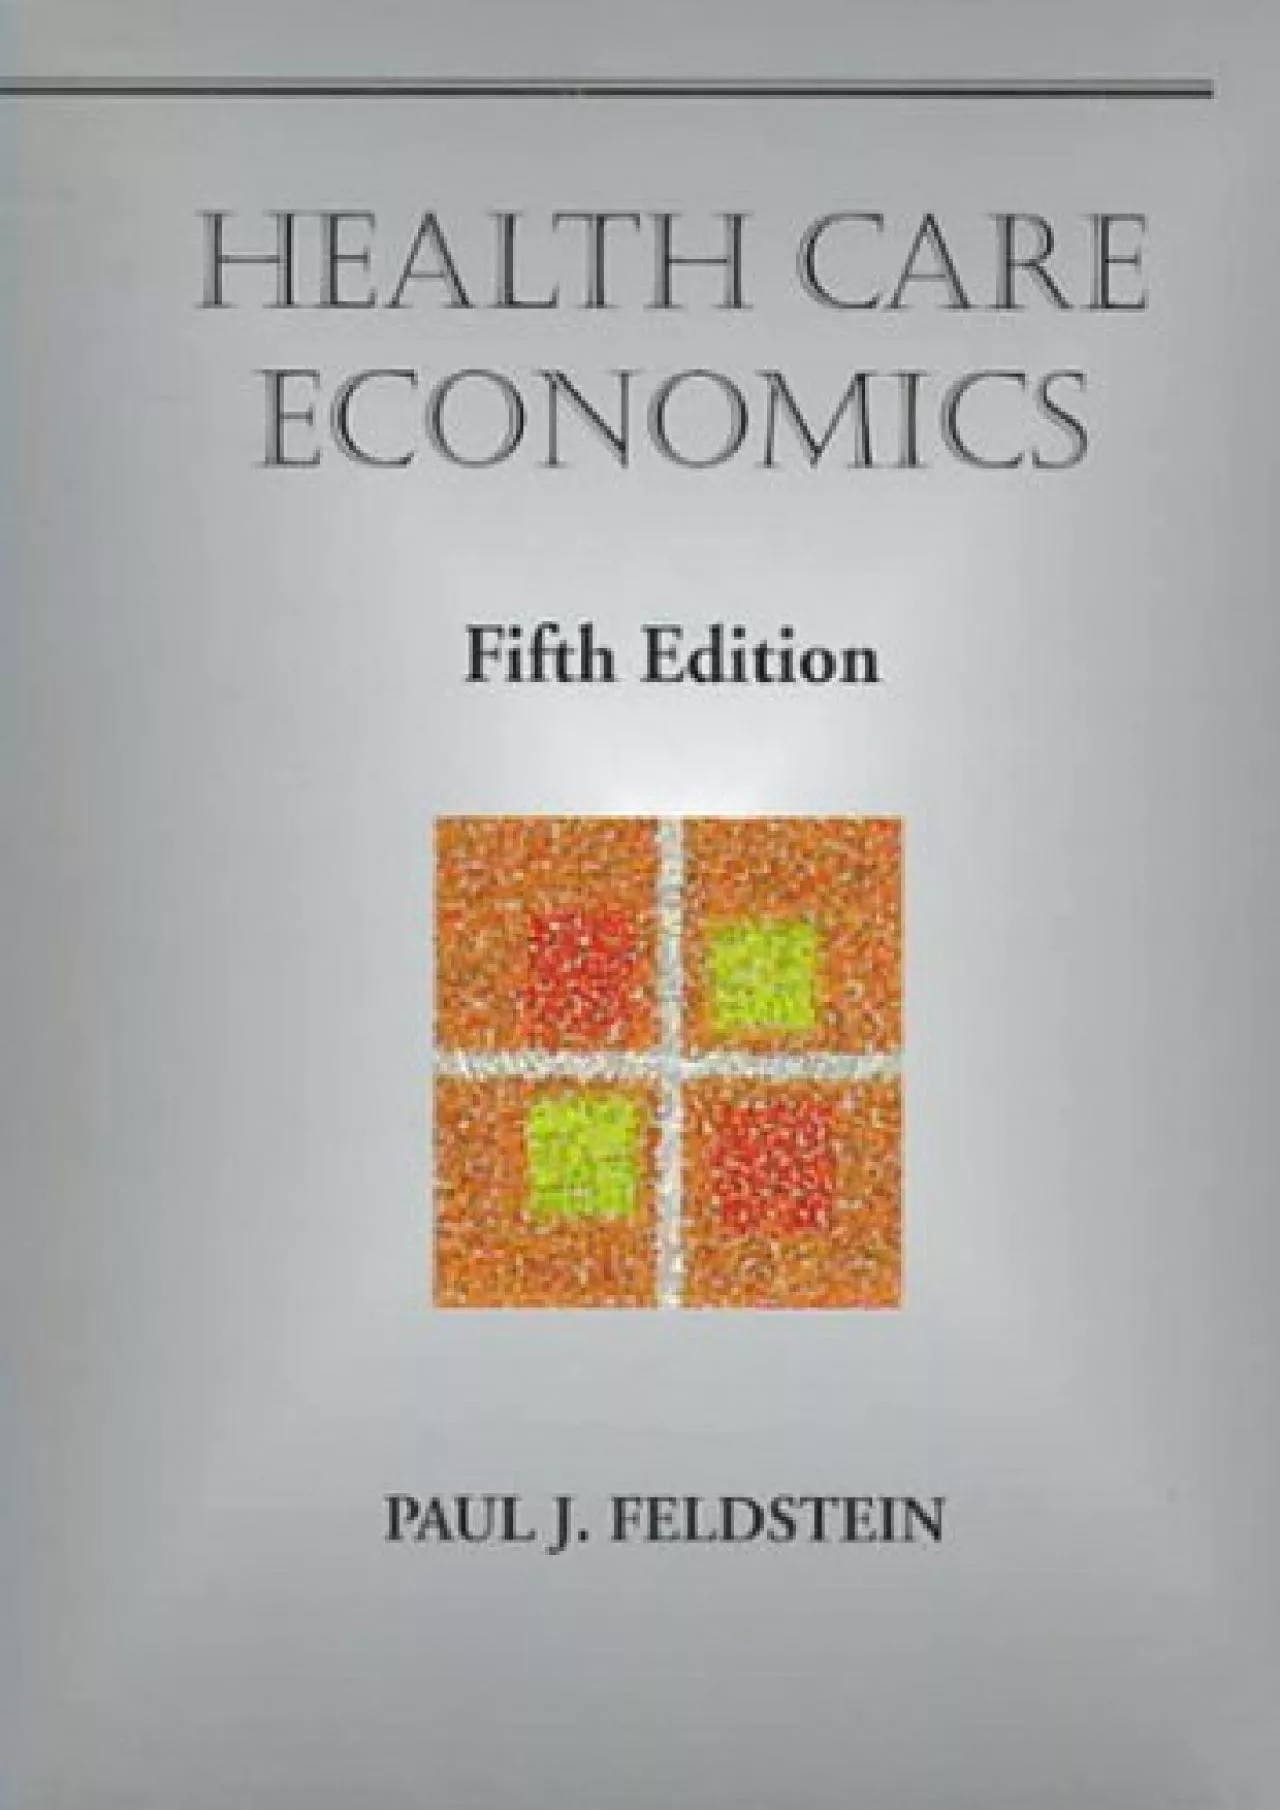 (DOWNLOAD)-Health Care Economics (Delmar Series in Health Services Administration)